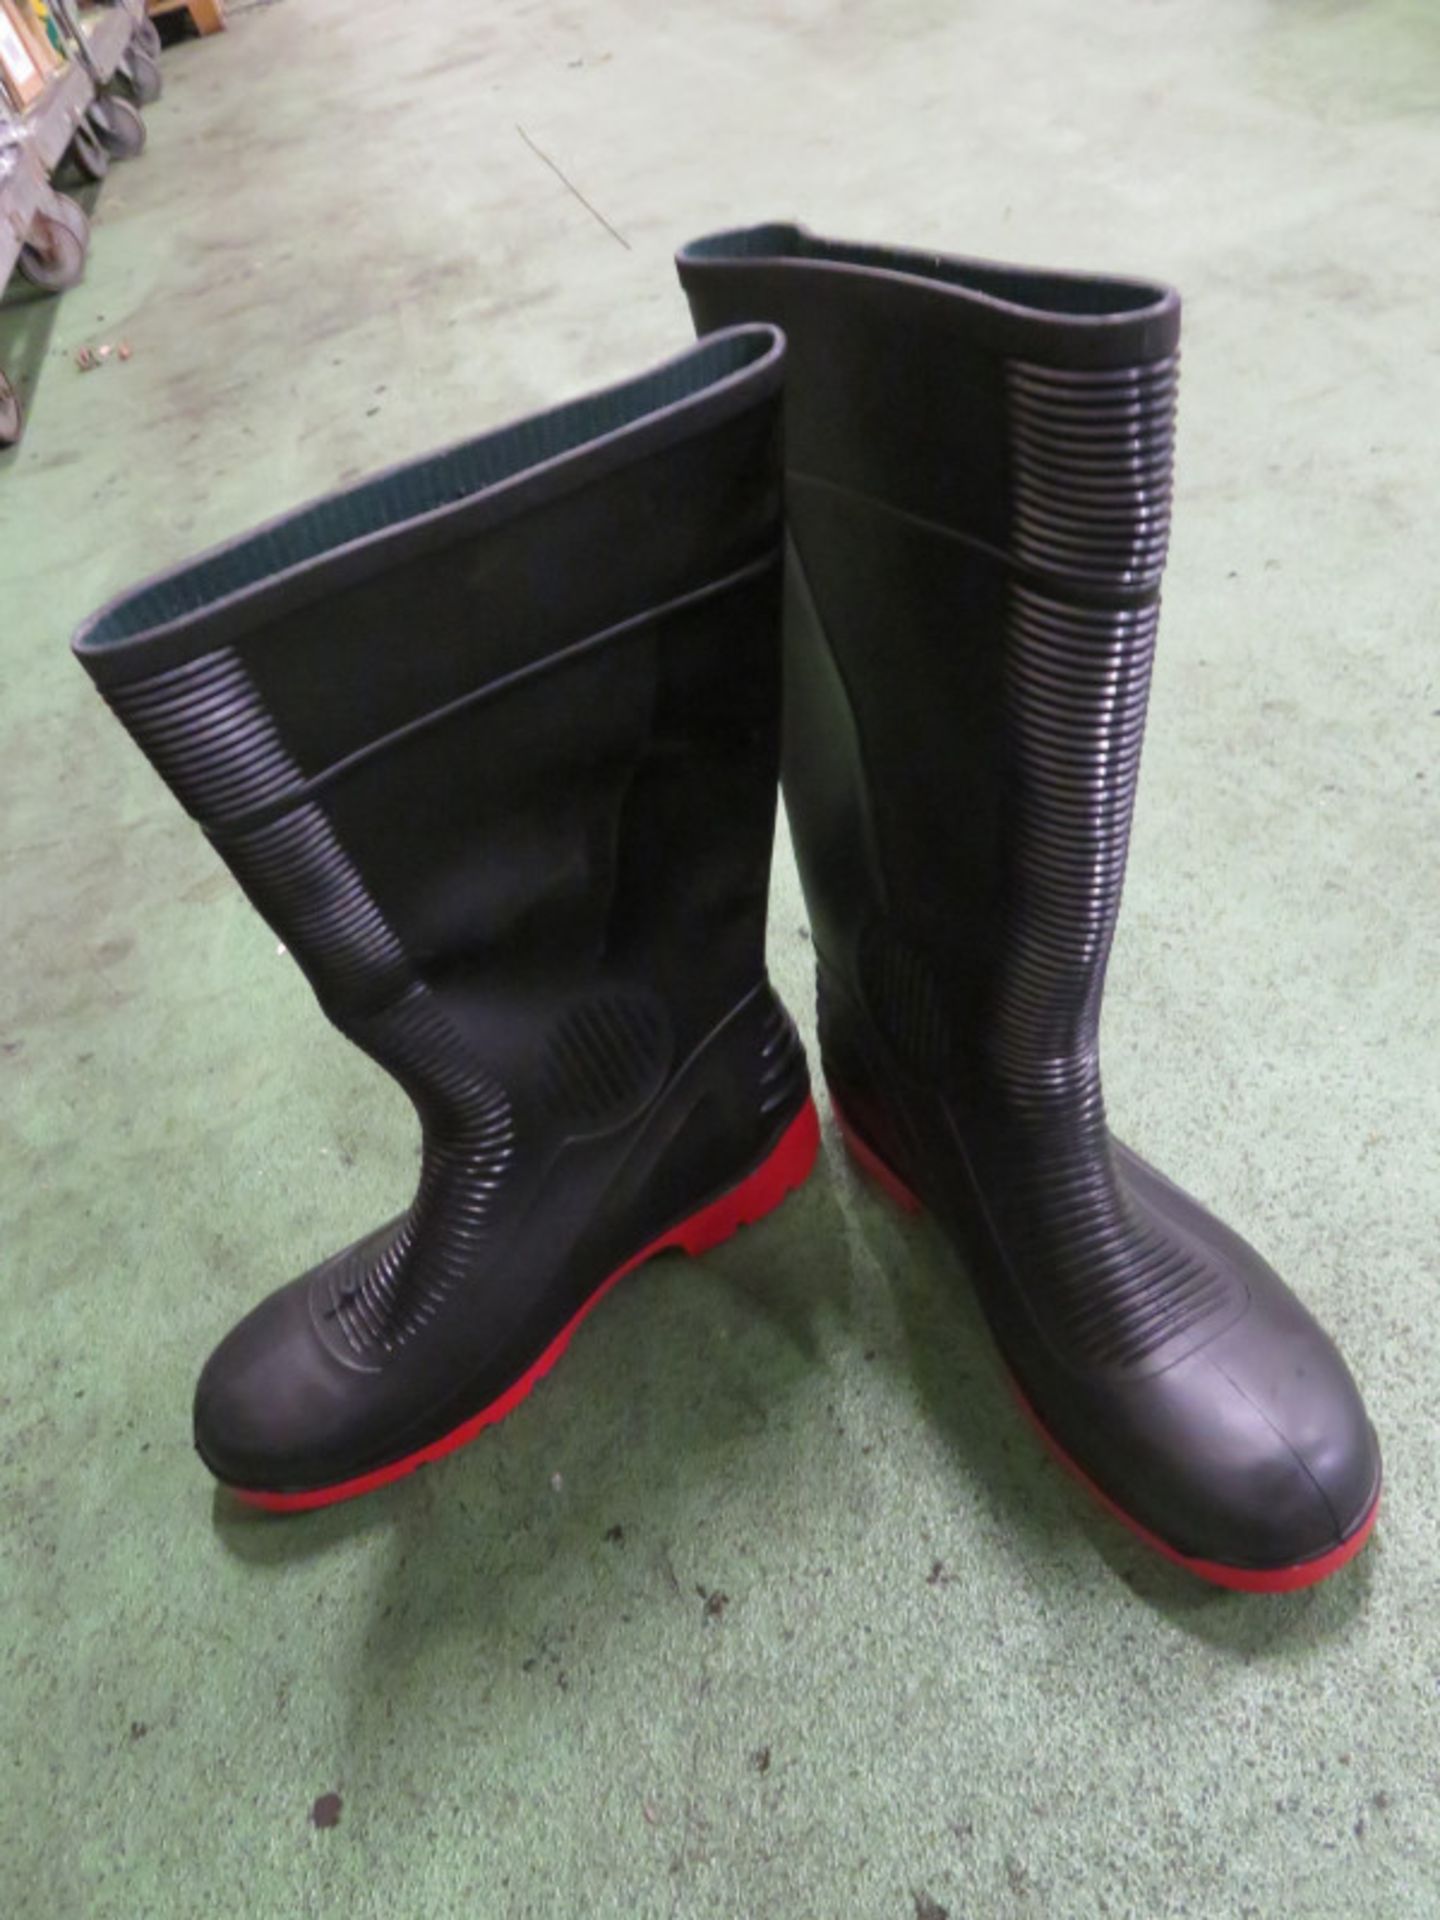 Centek workwear wellington boots - 11 / 46 - Image 2 of 2